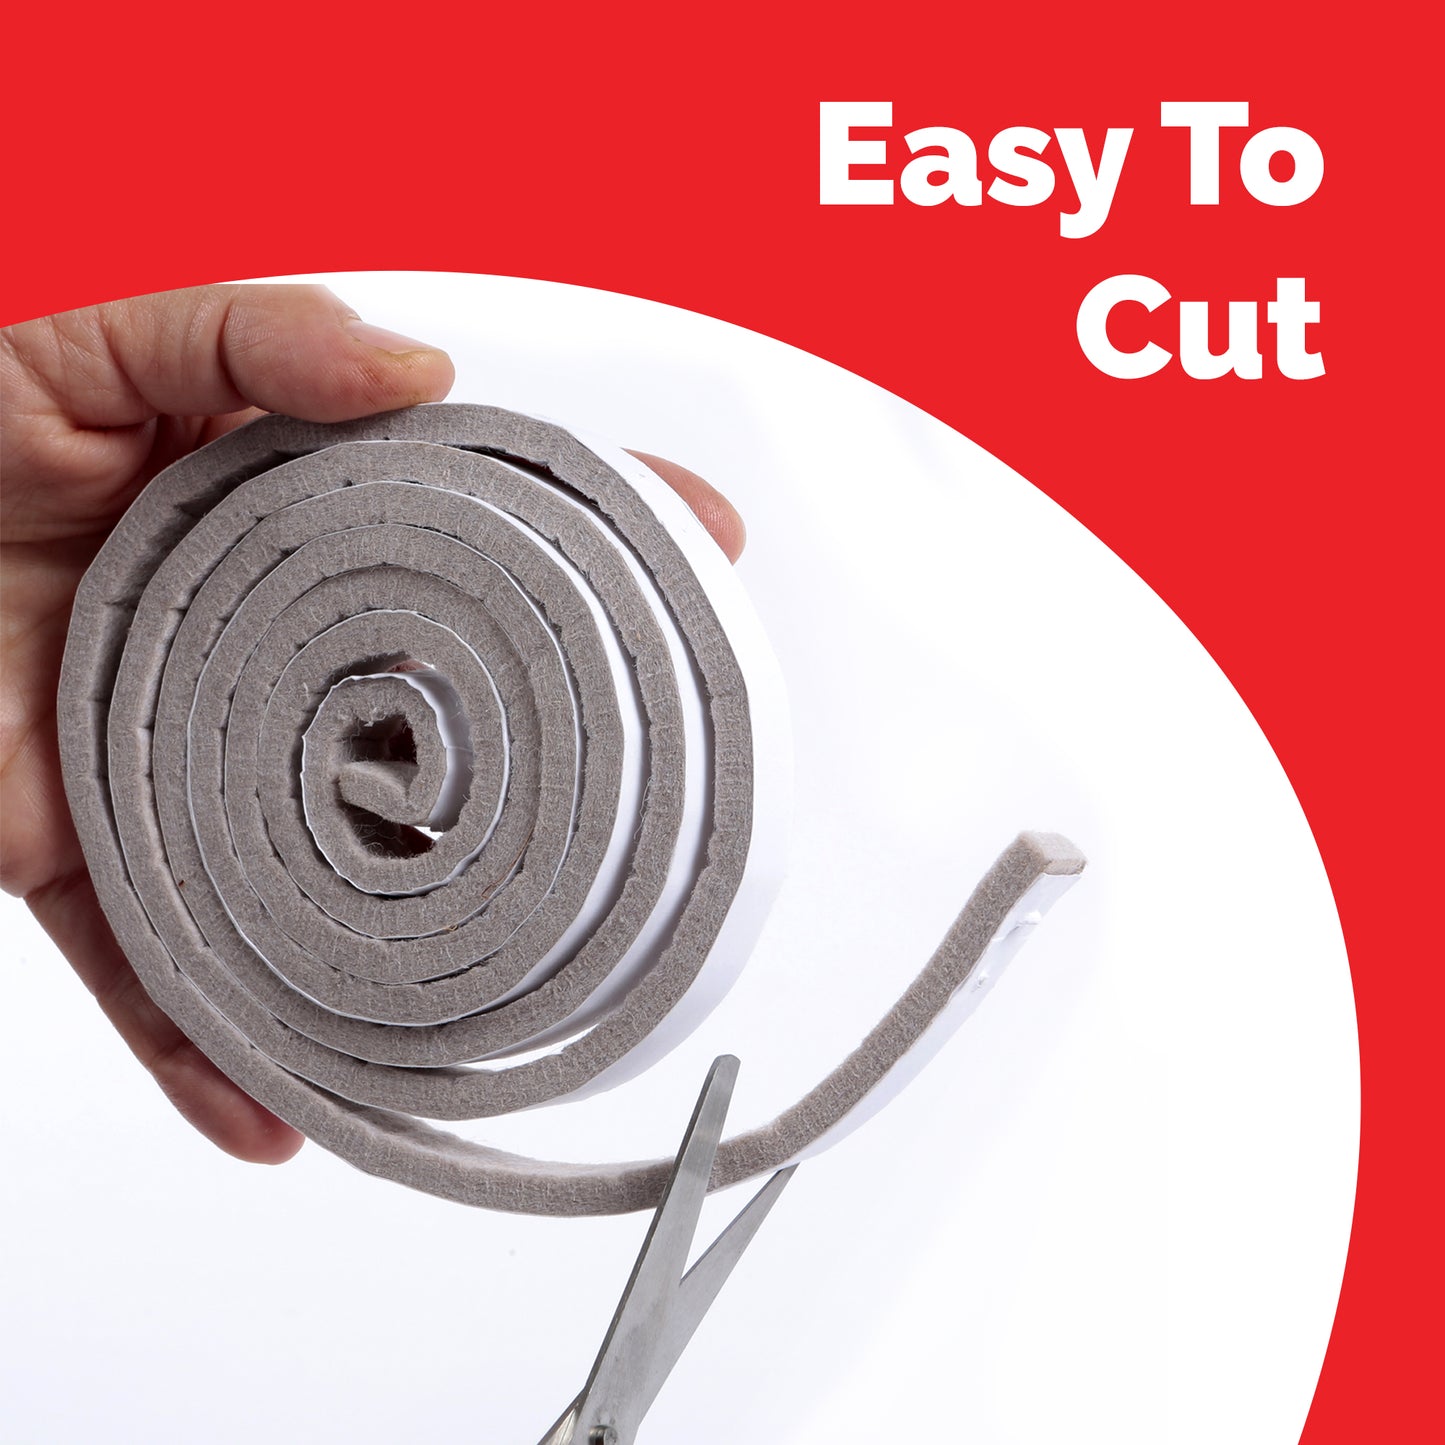 Beige furniture felt rolls can be cut to desired length using scissors.